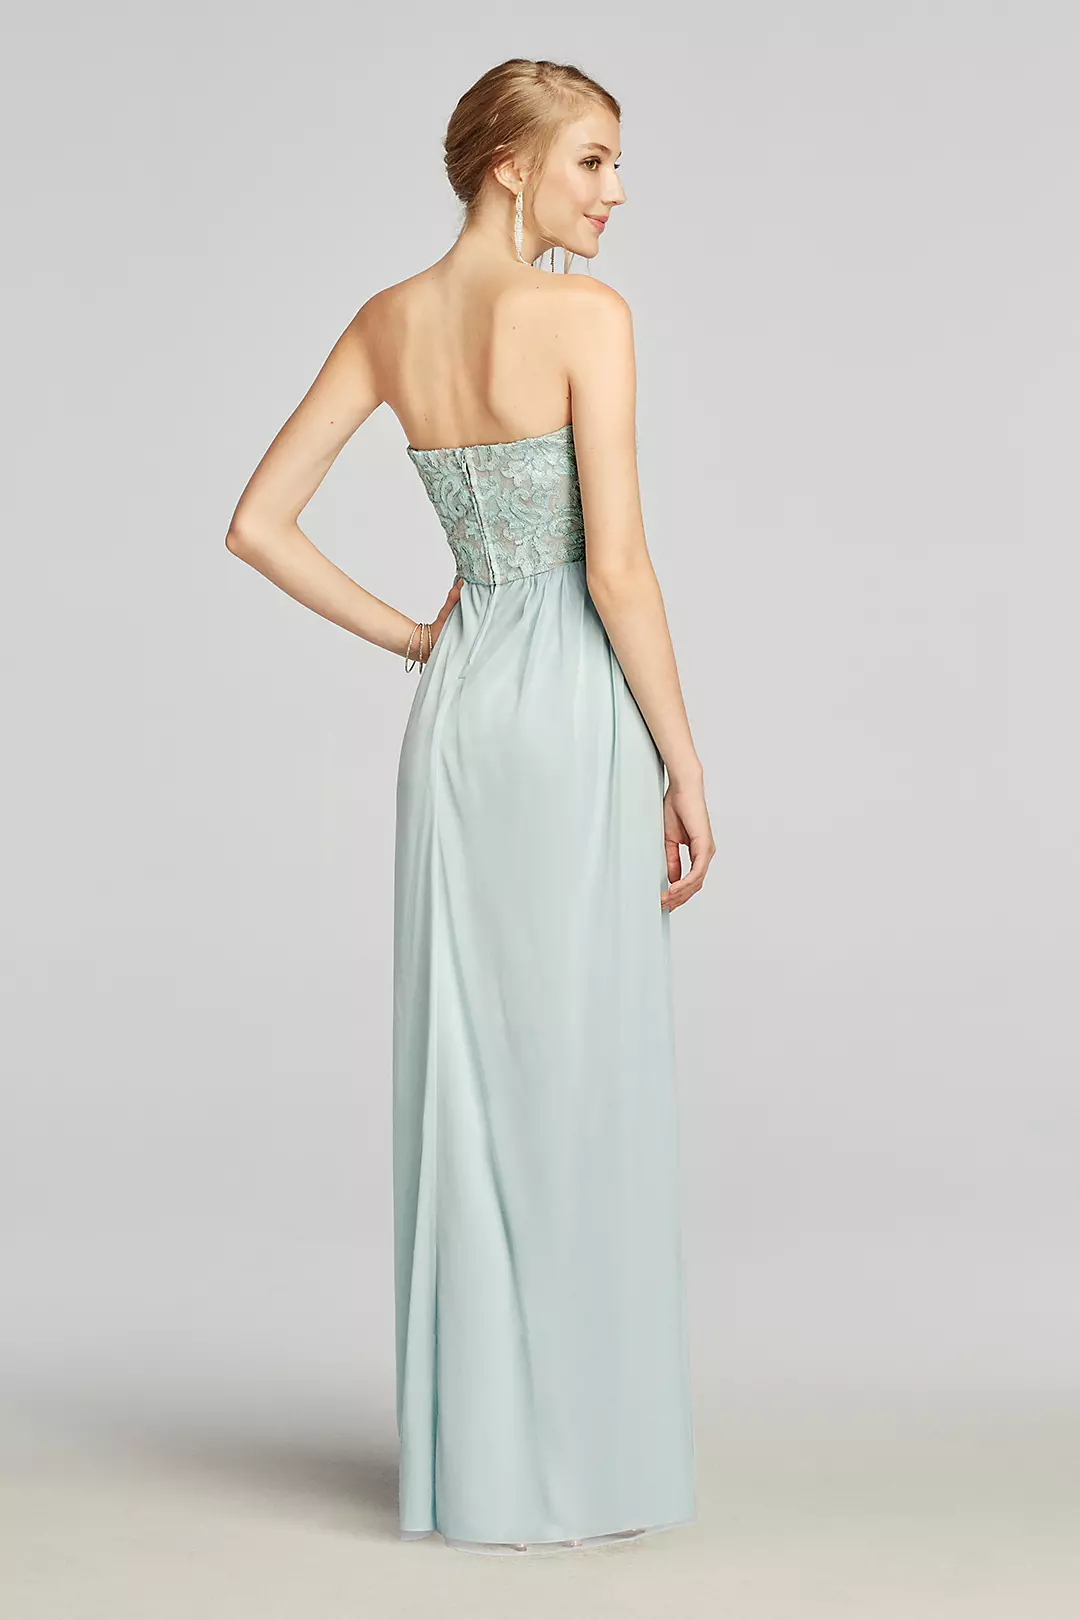 Strapless Chiffon Prom Dress with Lace Bodice Image 2